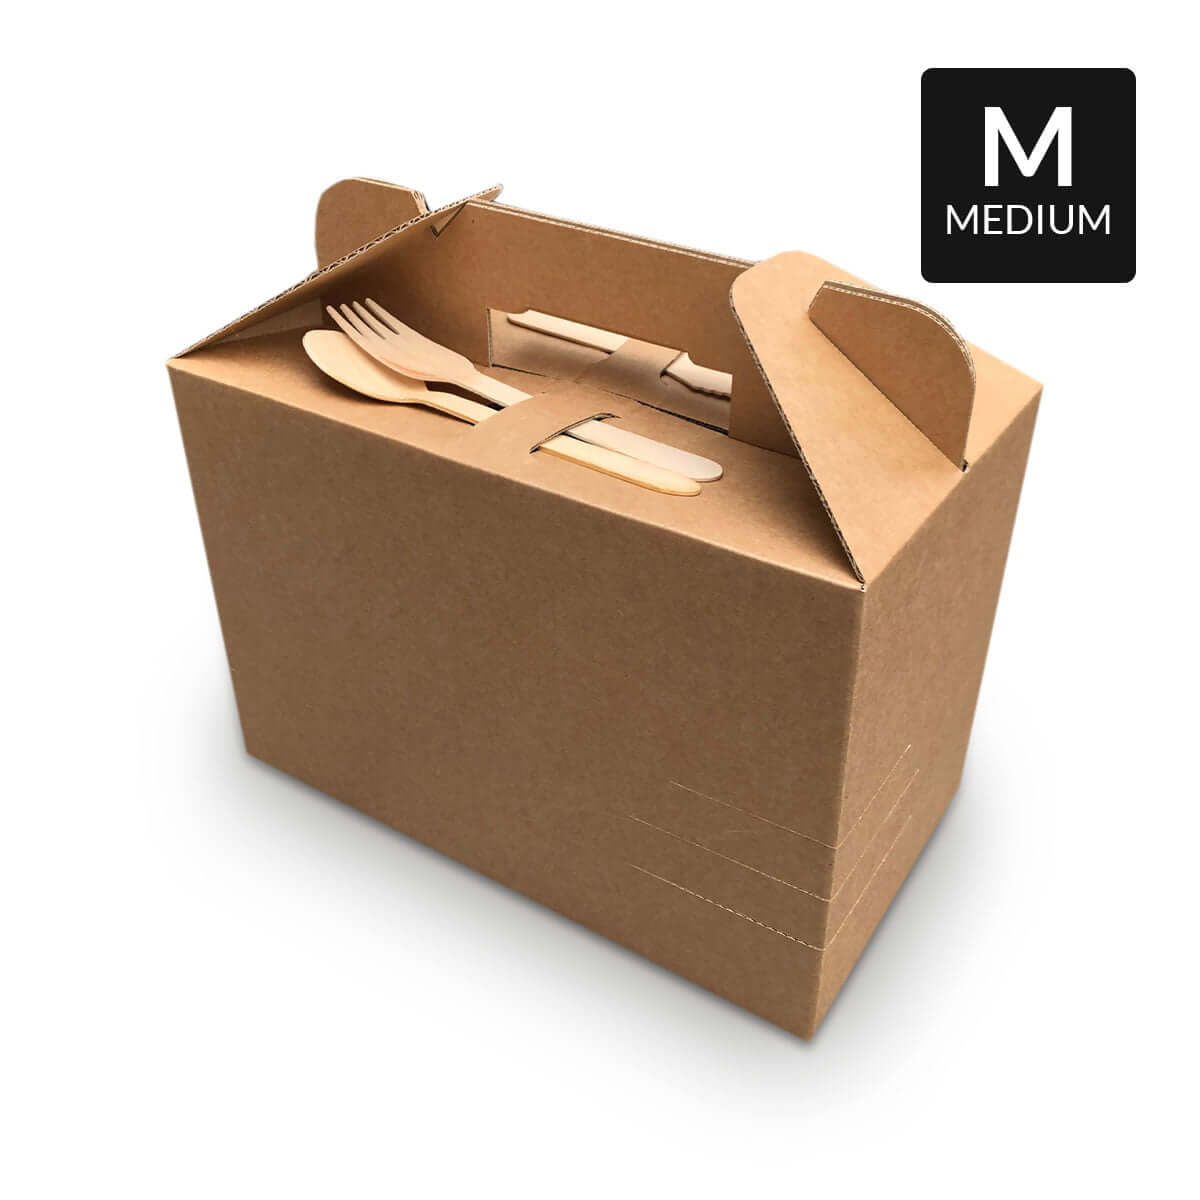 Lunch box with cardboard handle - Picnic box made of cardboard